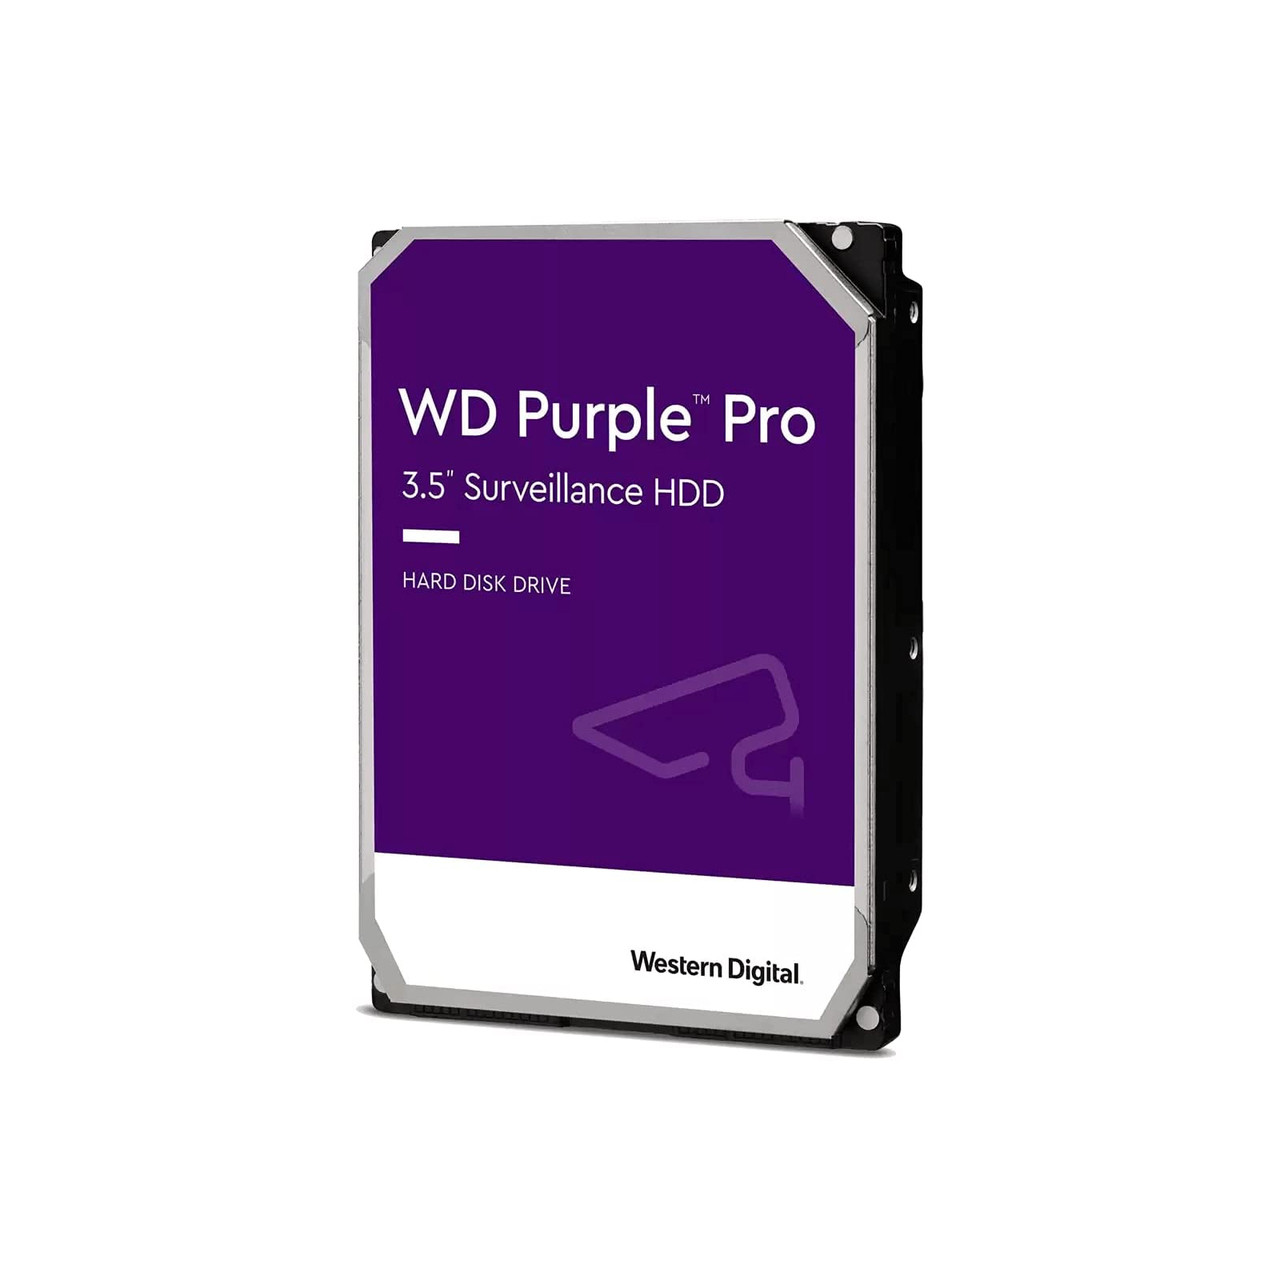 WD Purple Pro Surveillance 18TB Internal Hard Drive HDD - 7200 RPM, SATA 6 Gb/s, 512 MB Cache, 3.5" WD181PURP (Pack of 6)